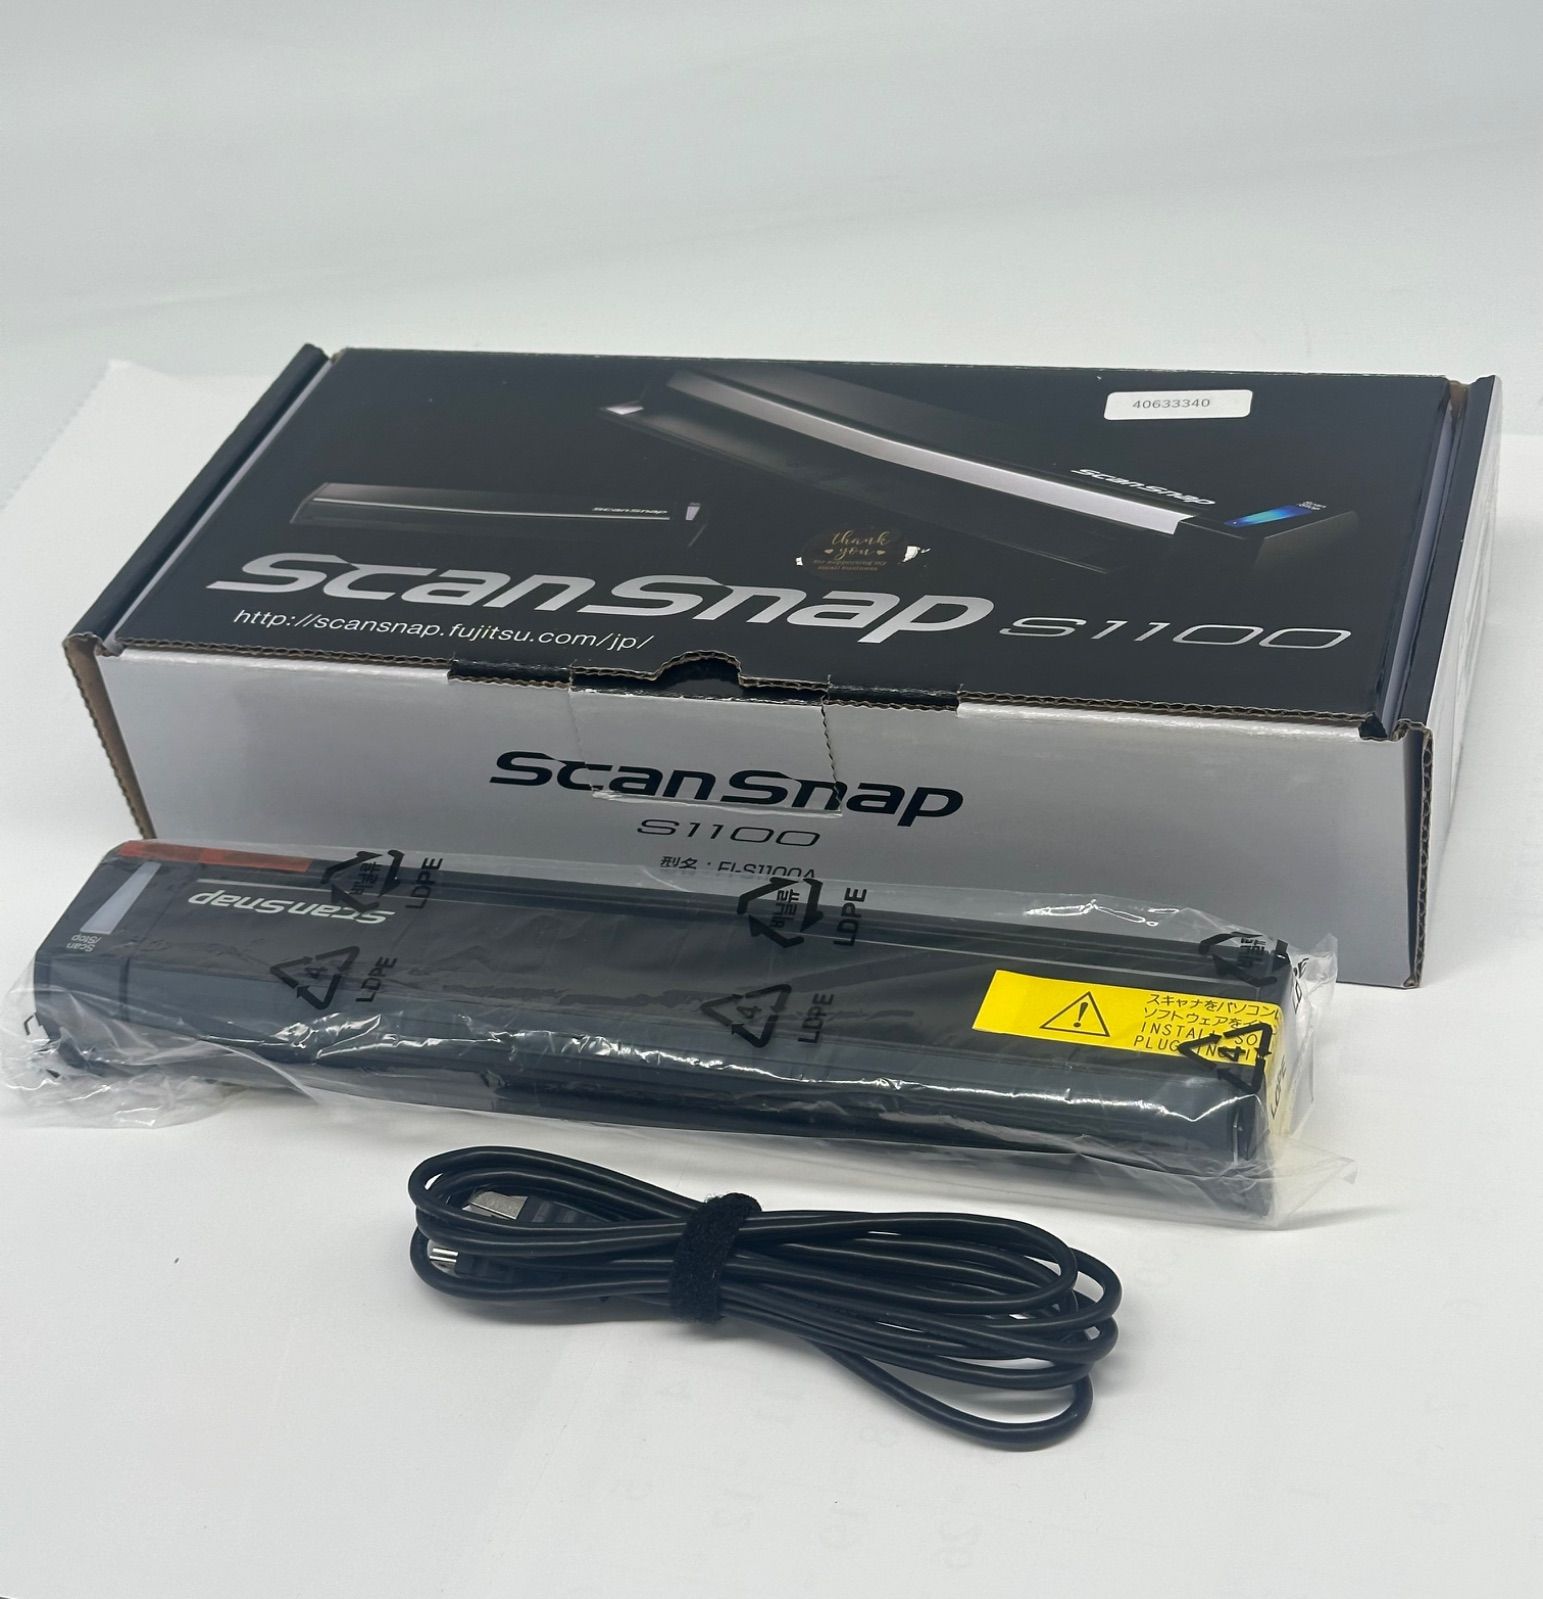 FUJITSU PFU 小型・軽量 モバイルスキャナー ScanSnap S1100 FI-S1100A -中古美品